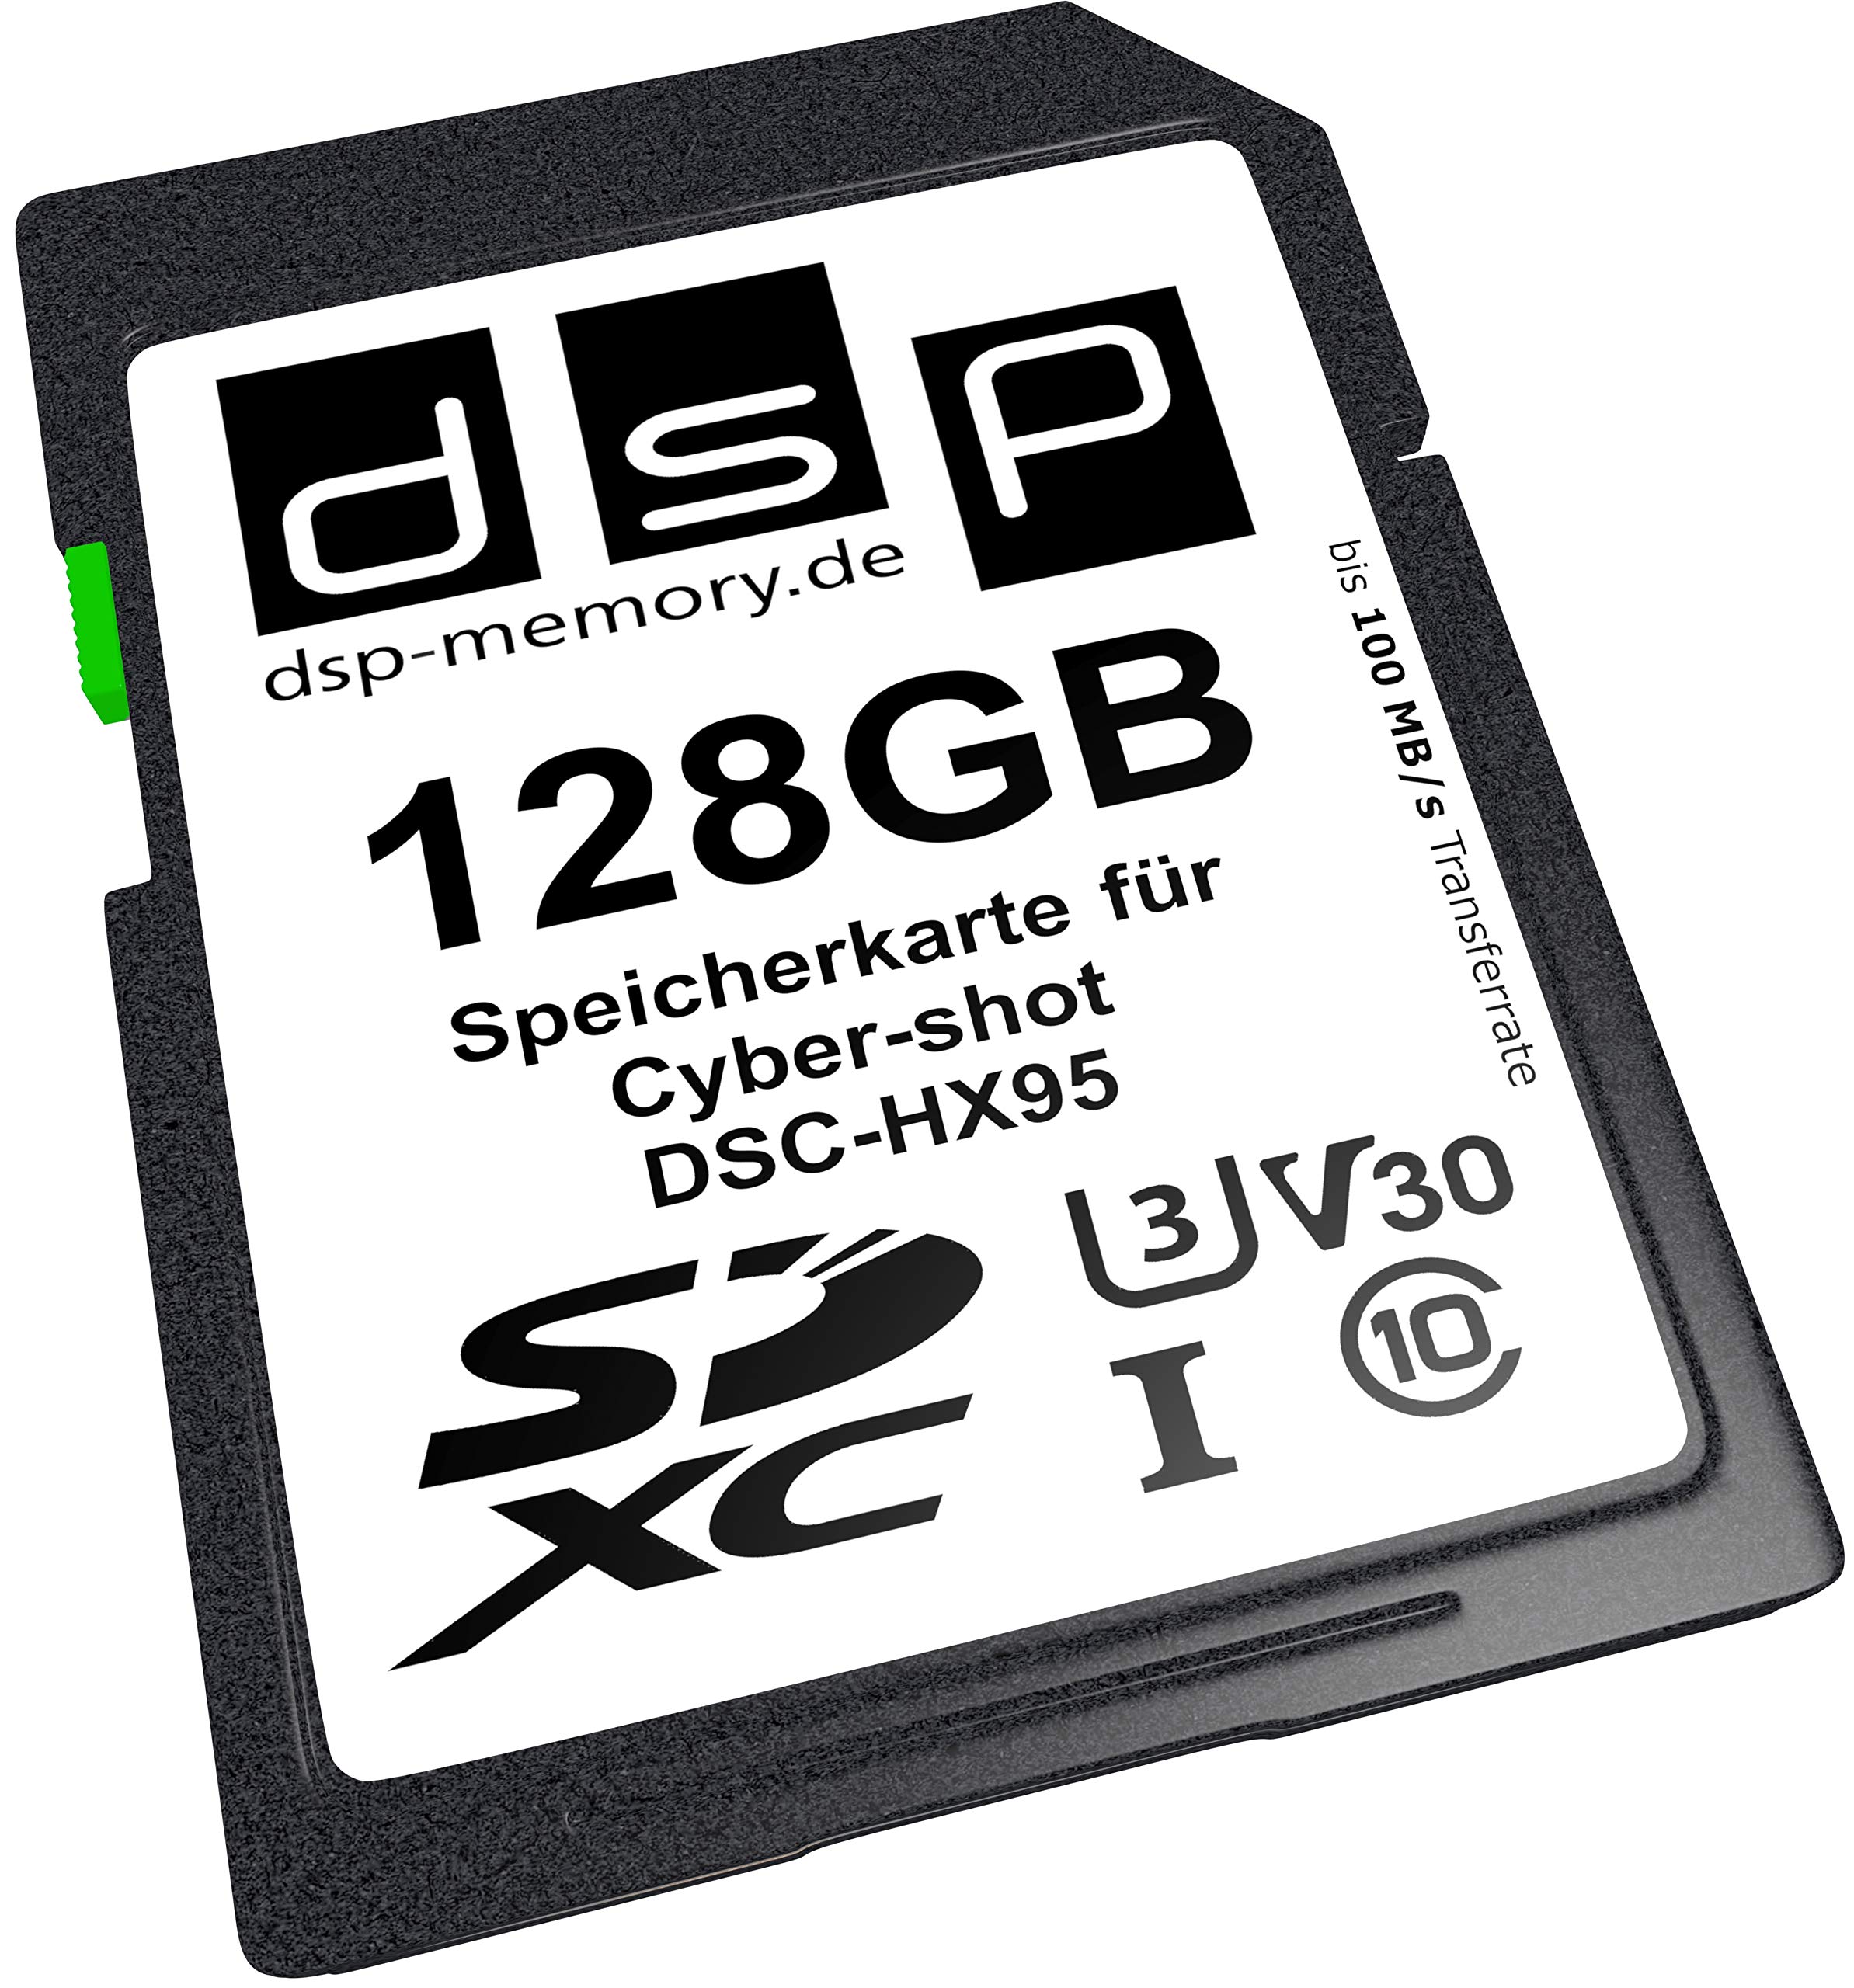 DSP Memory 128GB Professional V30 Speicherkarte für Cyber-Shot DSC-HX95 Digitalkamera